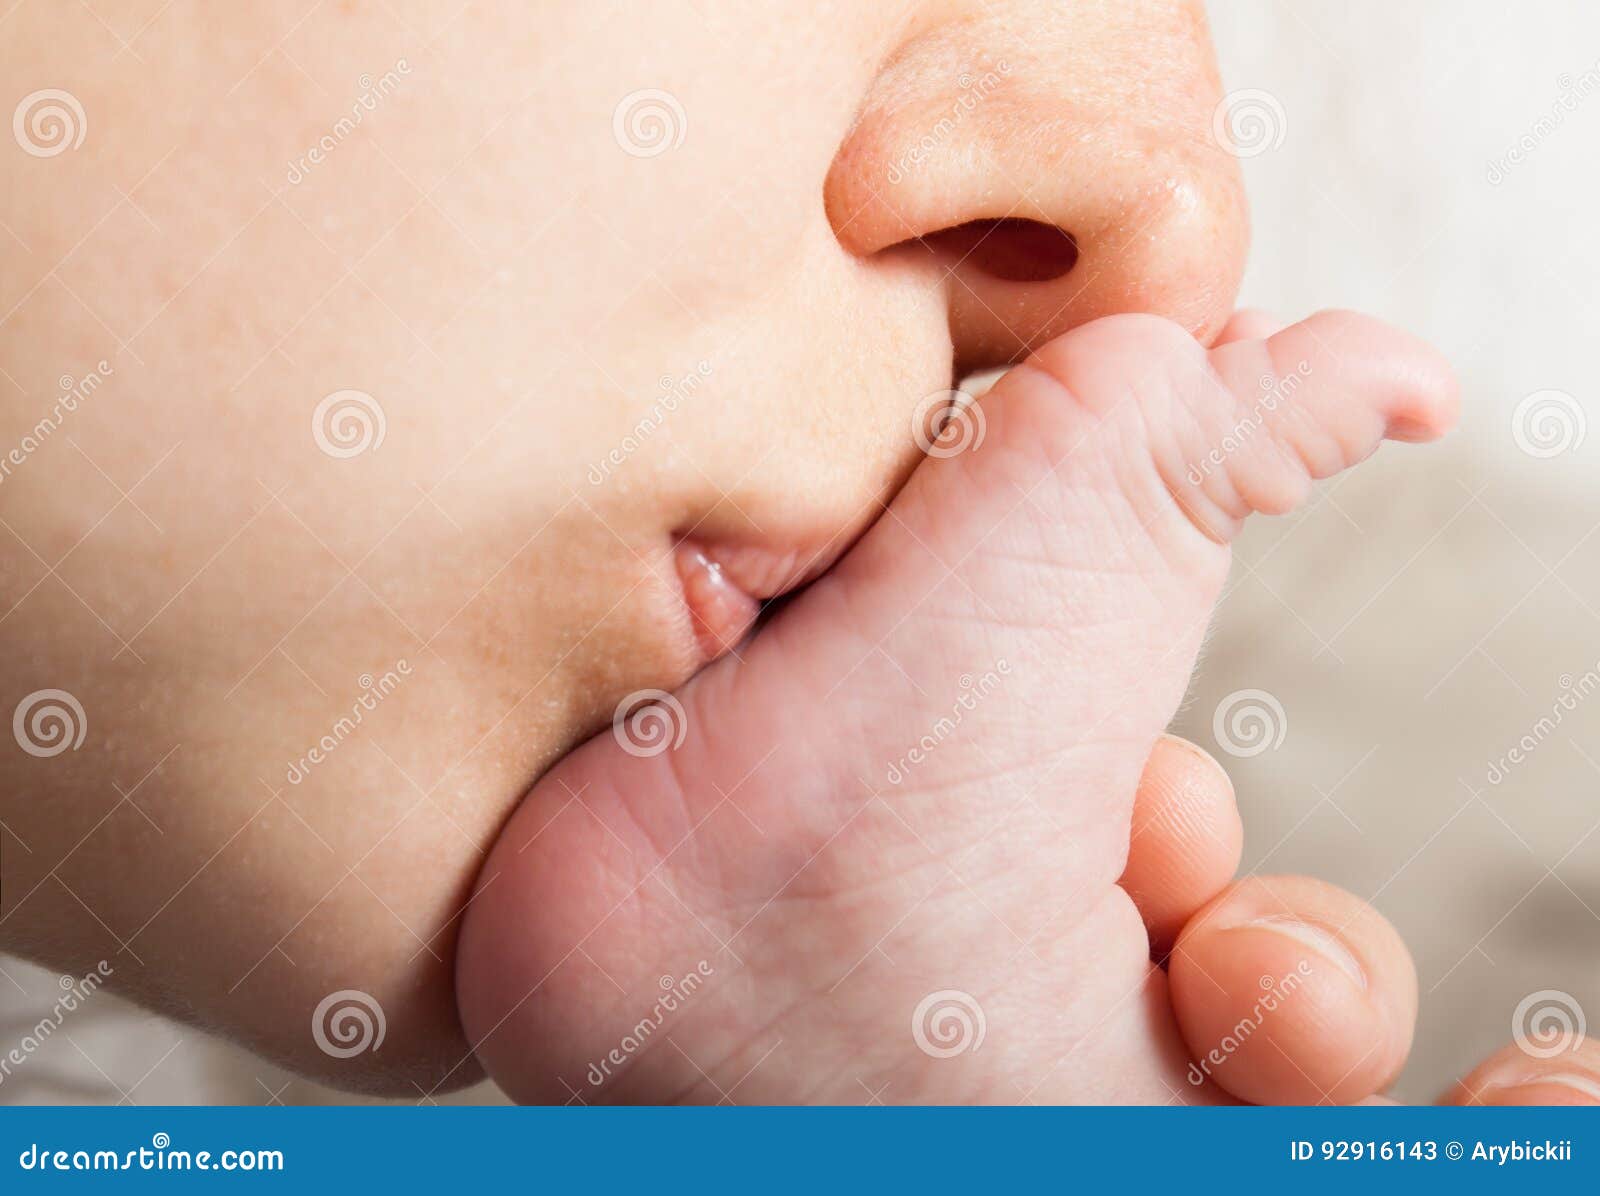 Целовал ноги маме. Поцелуй ножки младенца. Мама целует малыша. Мама целует ножки малышу. Мать целует новорожденного.